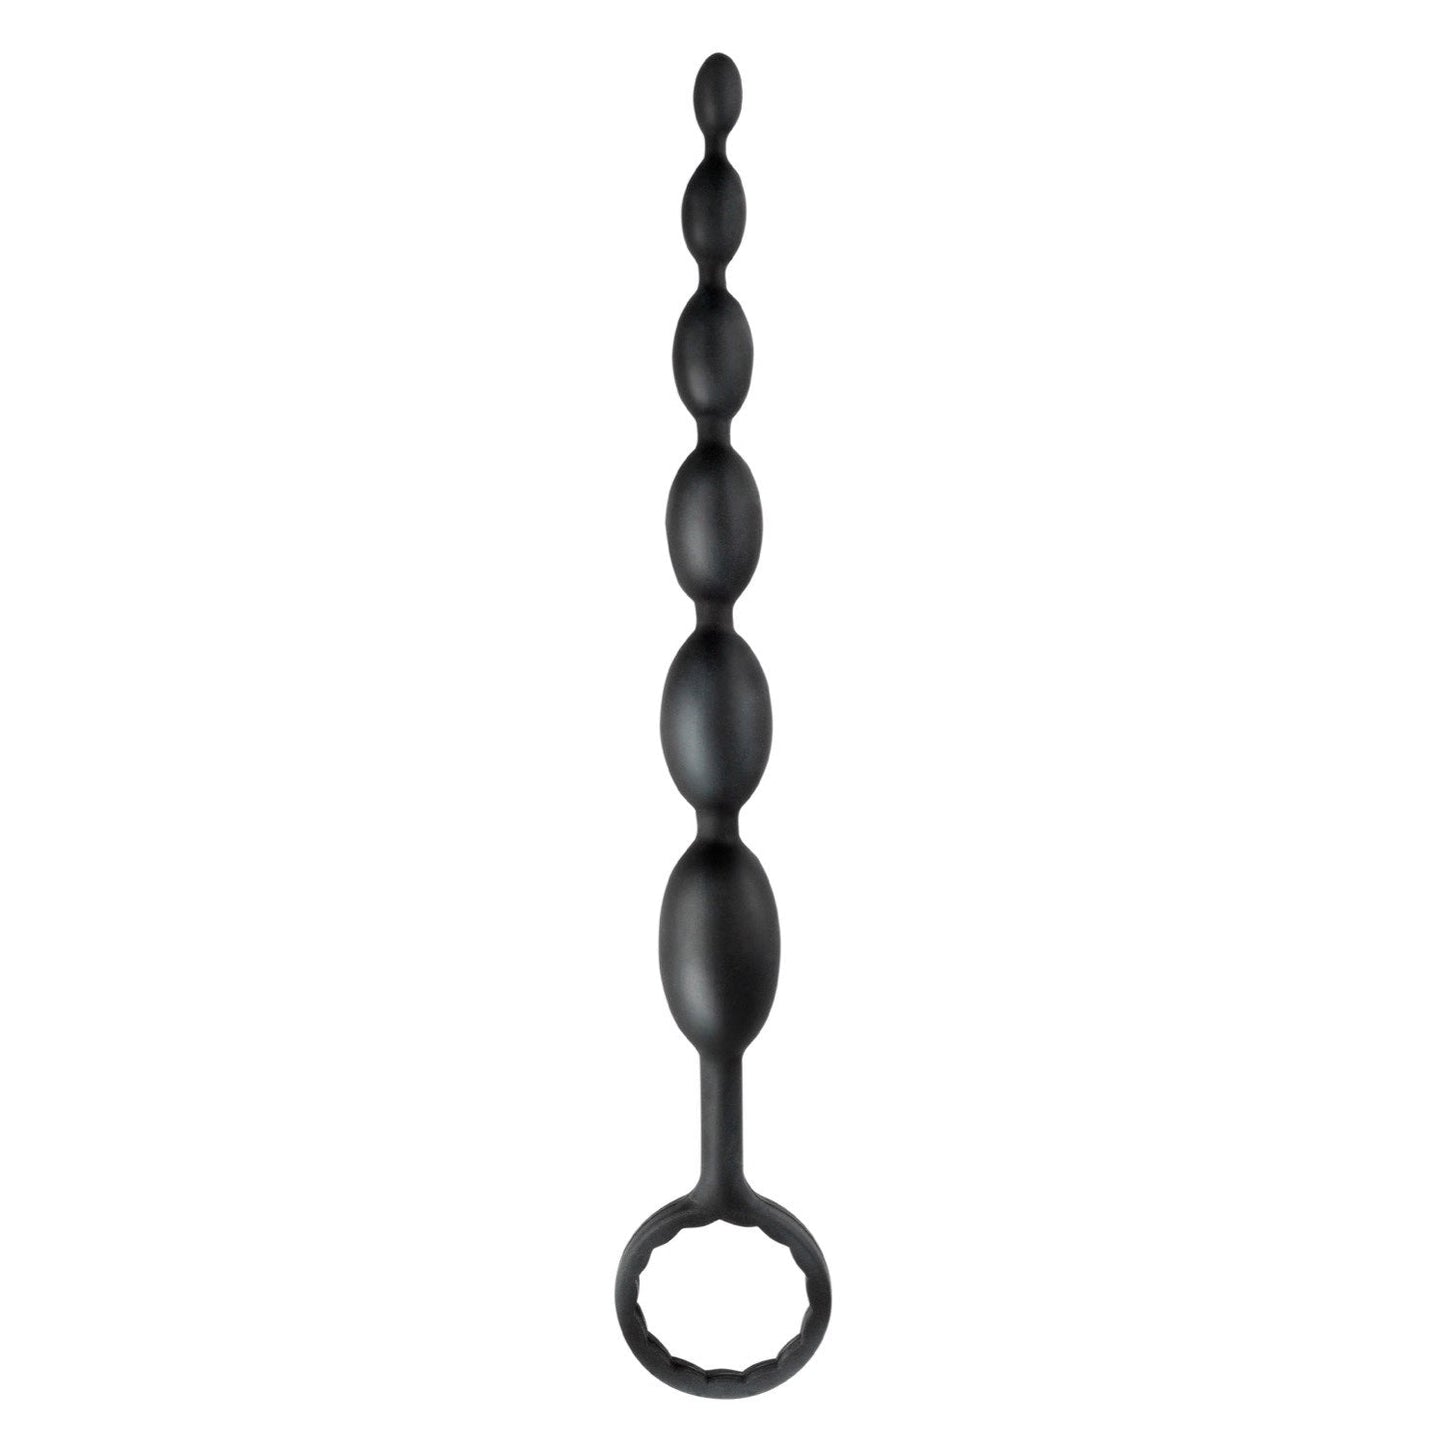 First-Time Fun Beads - Black 21 cm (8.25") Anal Beads